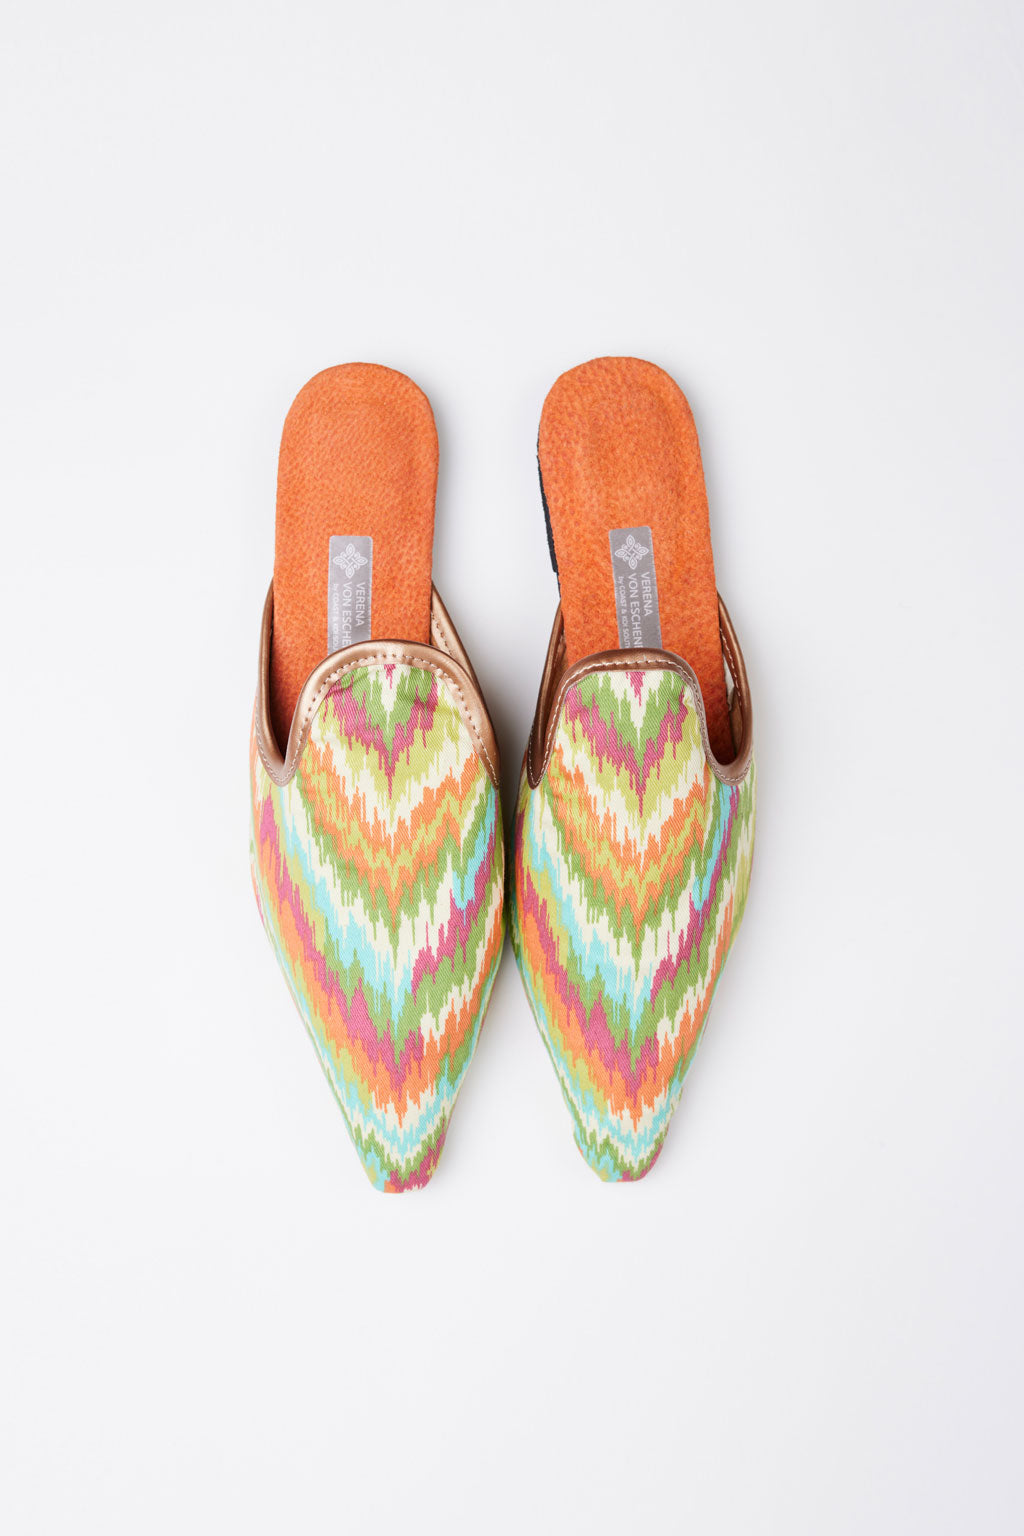 Slippers de luxe handmade Salia Gr. 41